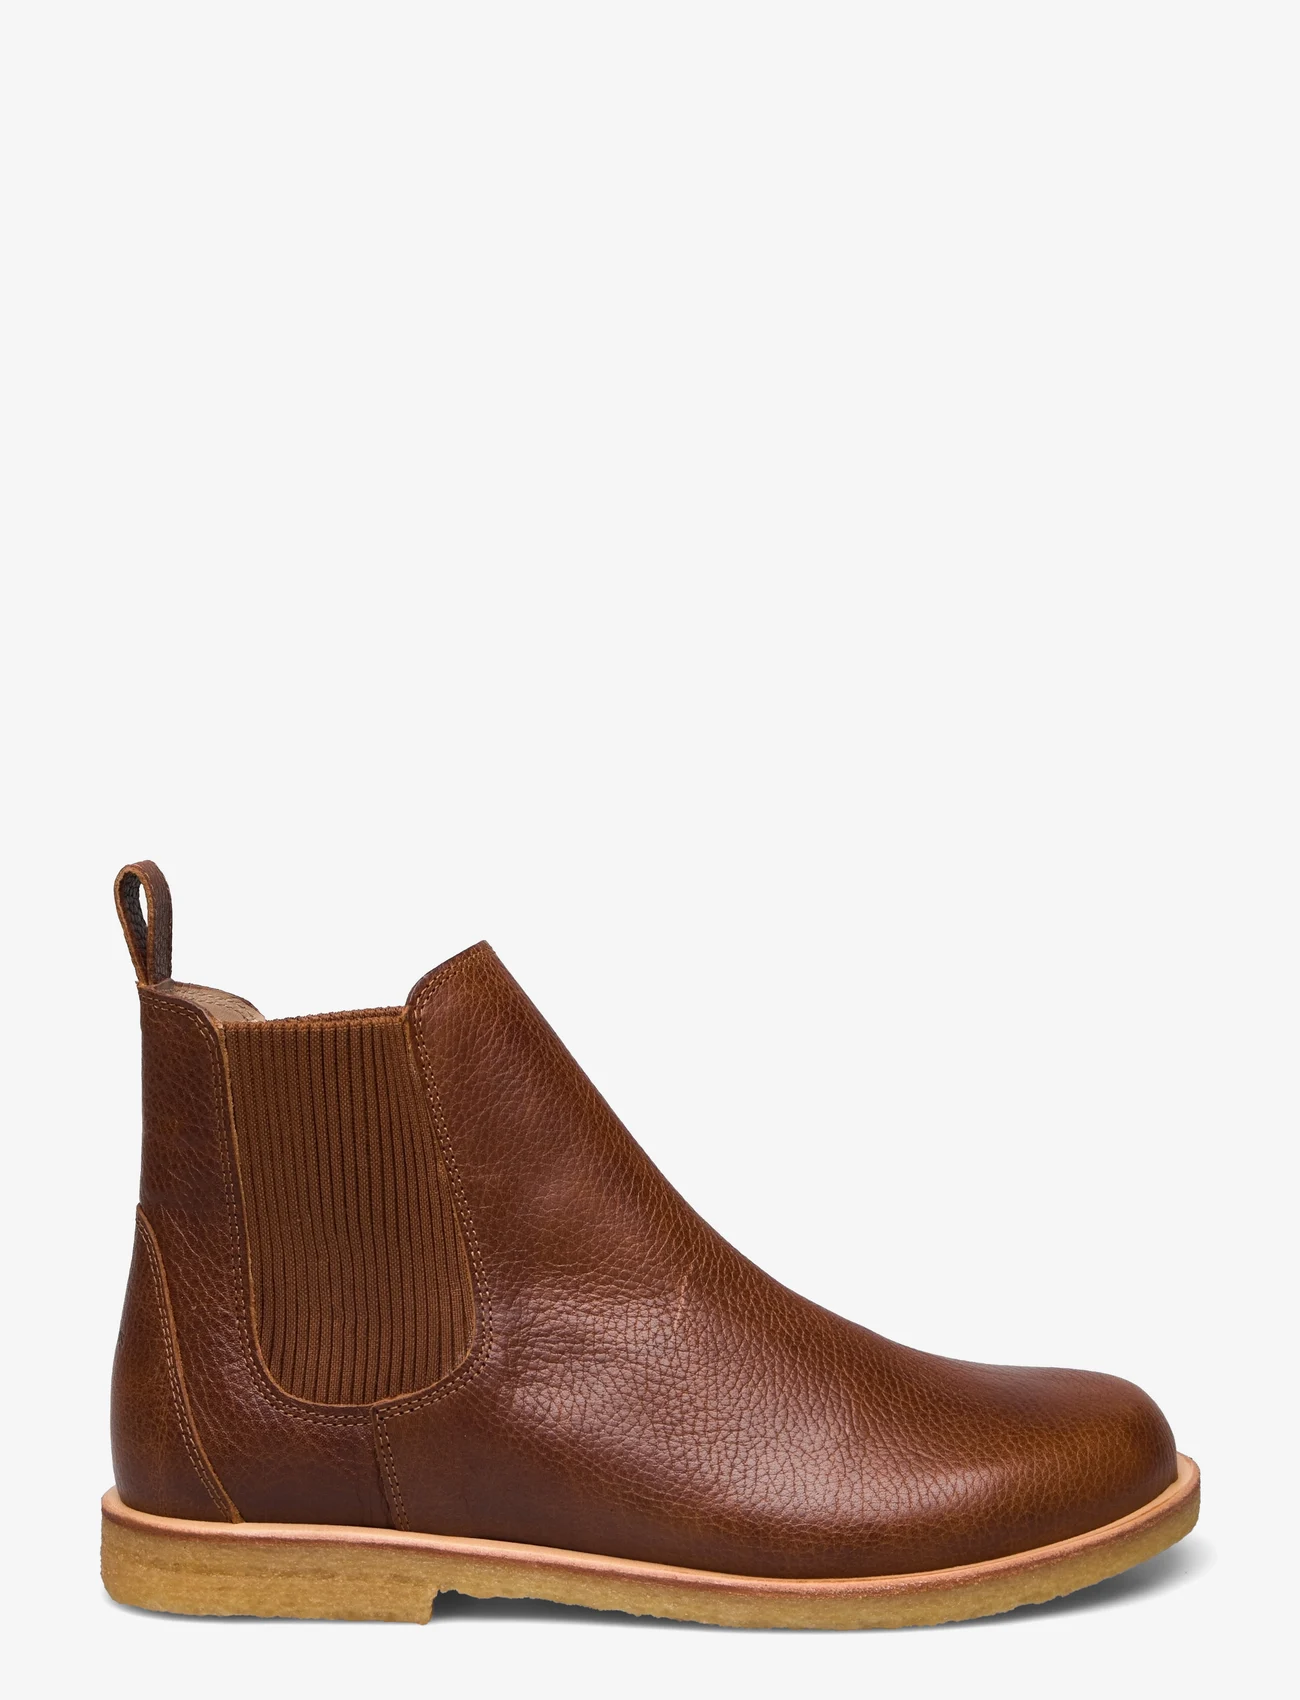 ANGULUS - Booties - flat - with elastic - chelsea boots - 2509/040 medium brown/ cognac - 1